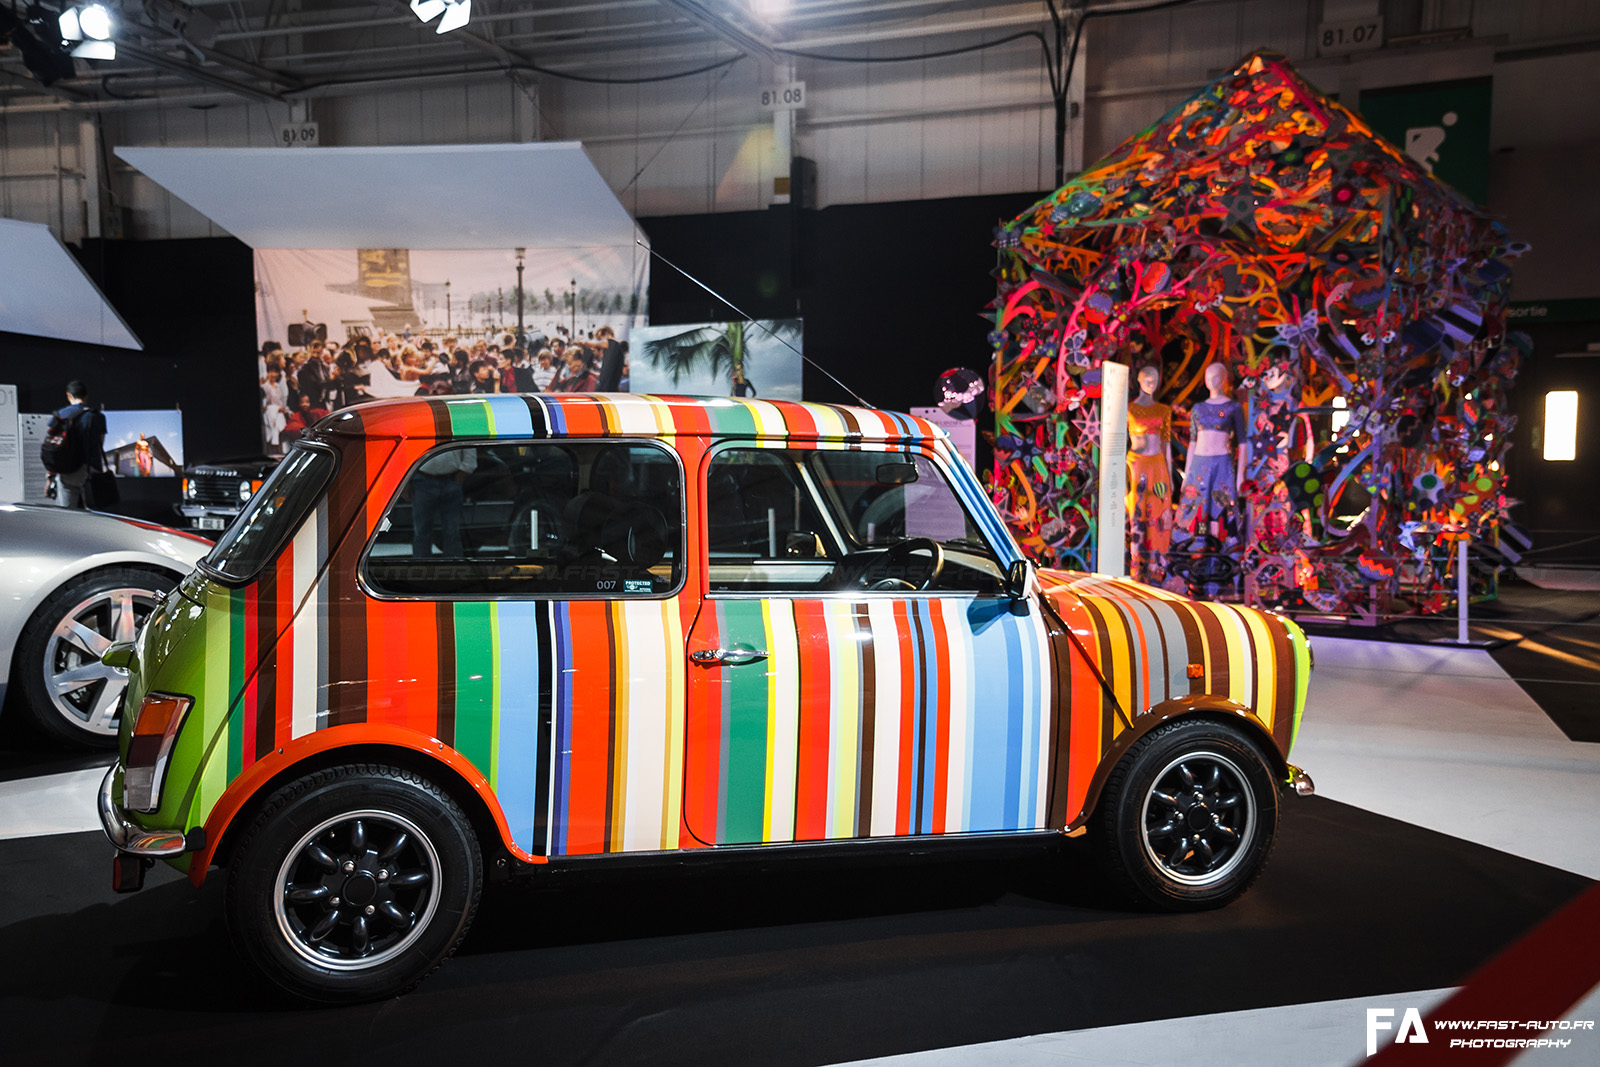 8-exposition-mode-paul-smith-mini-mondial-automobile-paris-2014.jpg